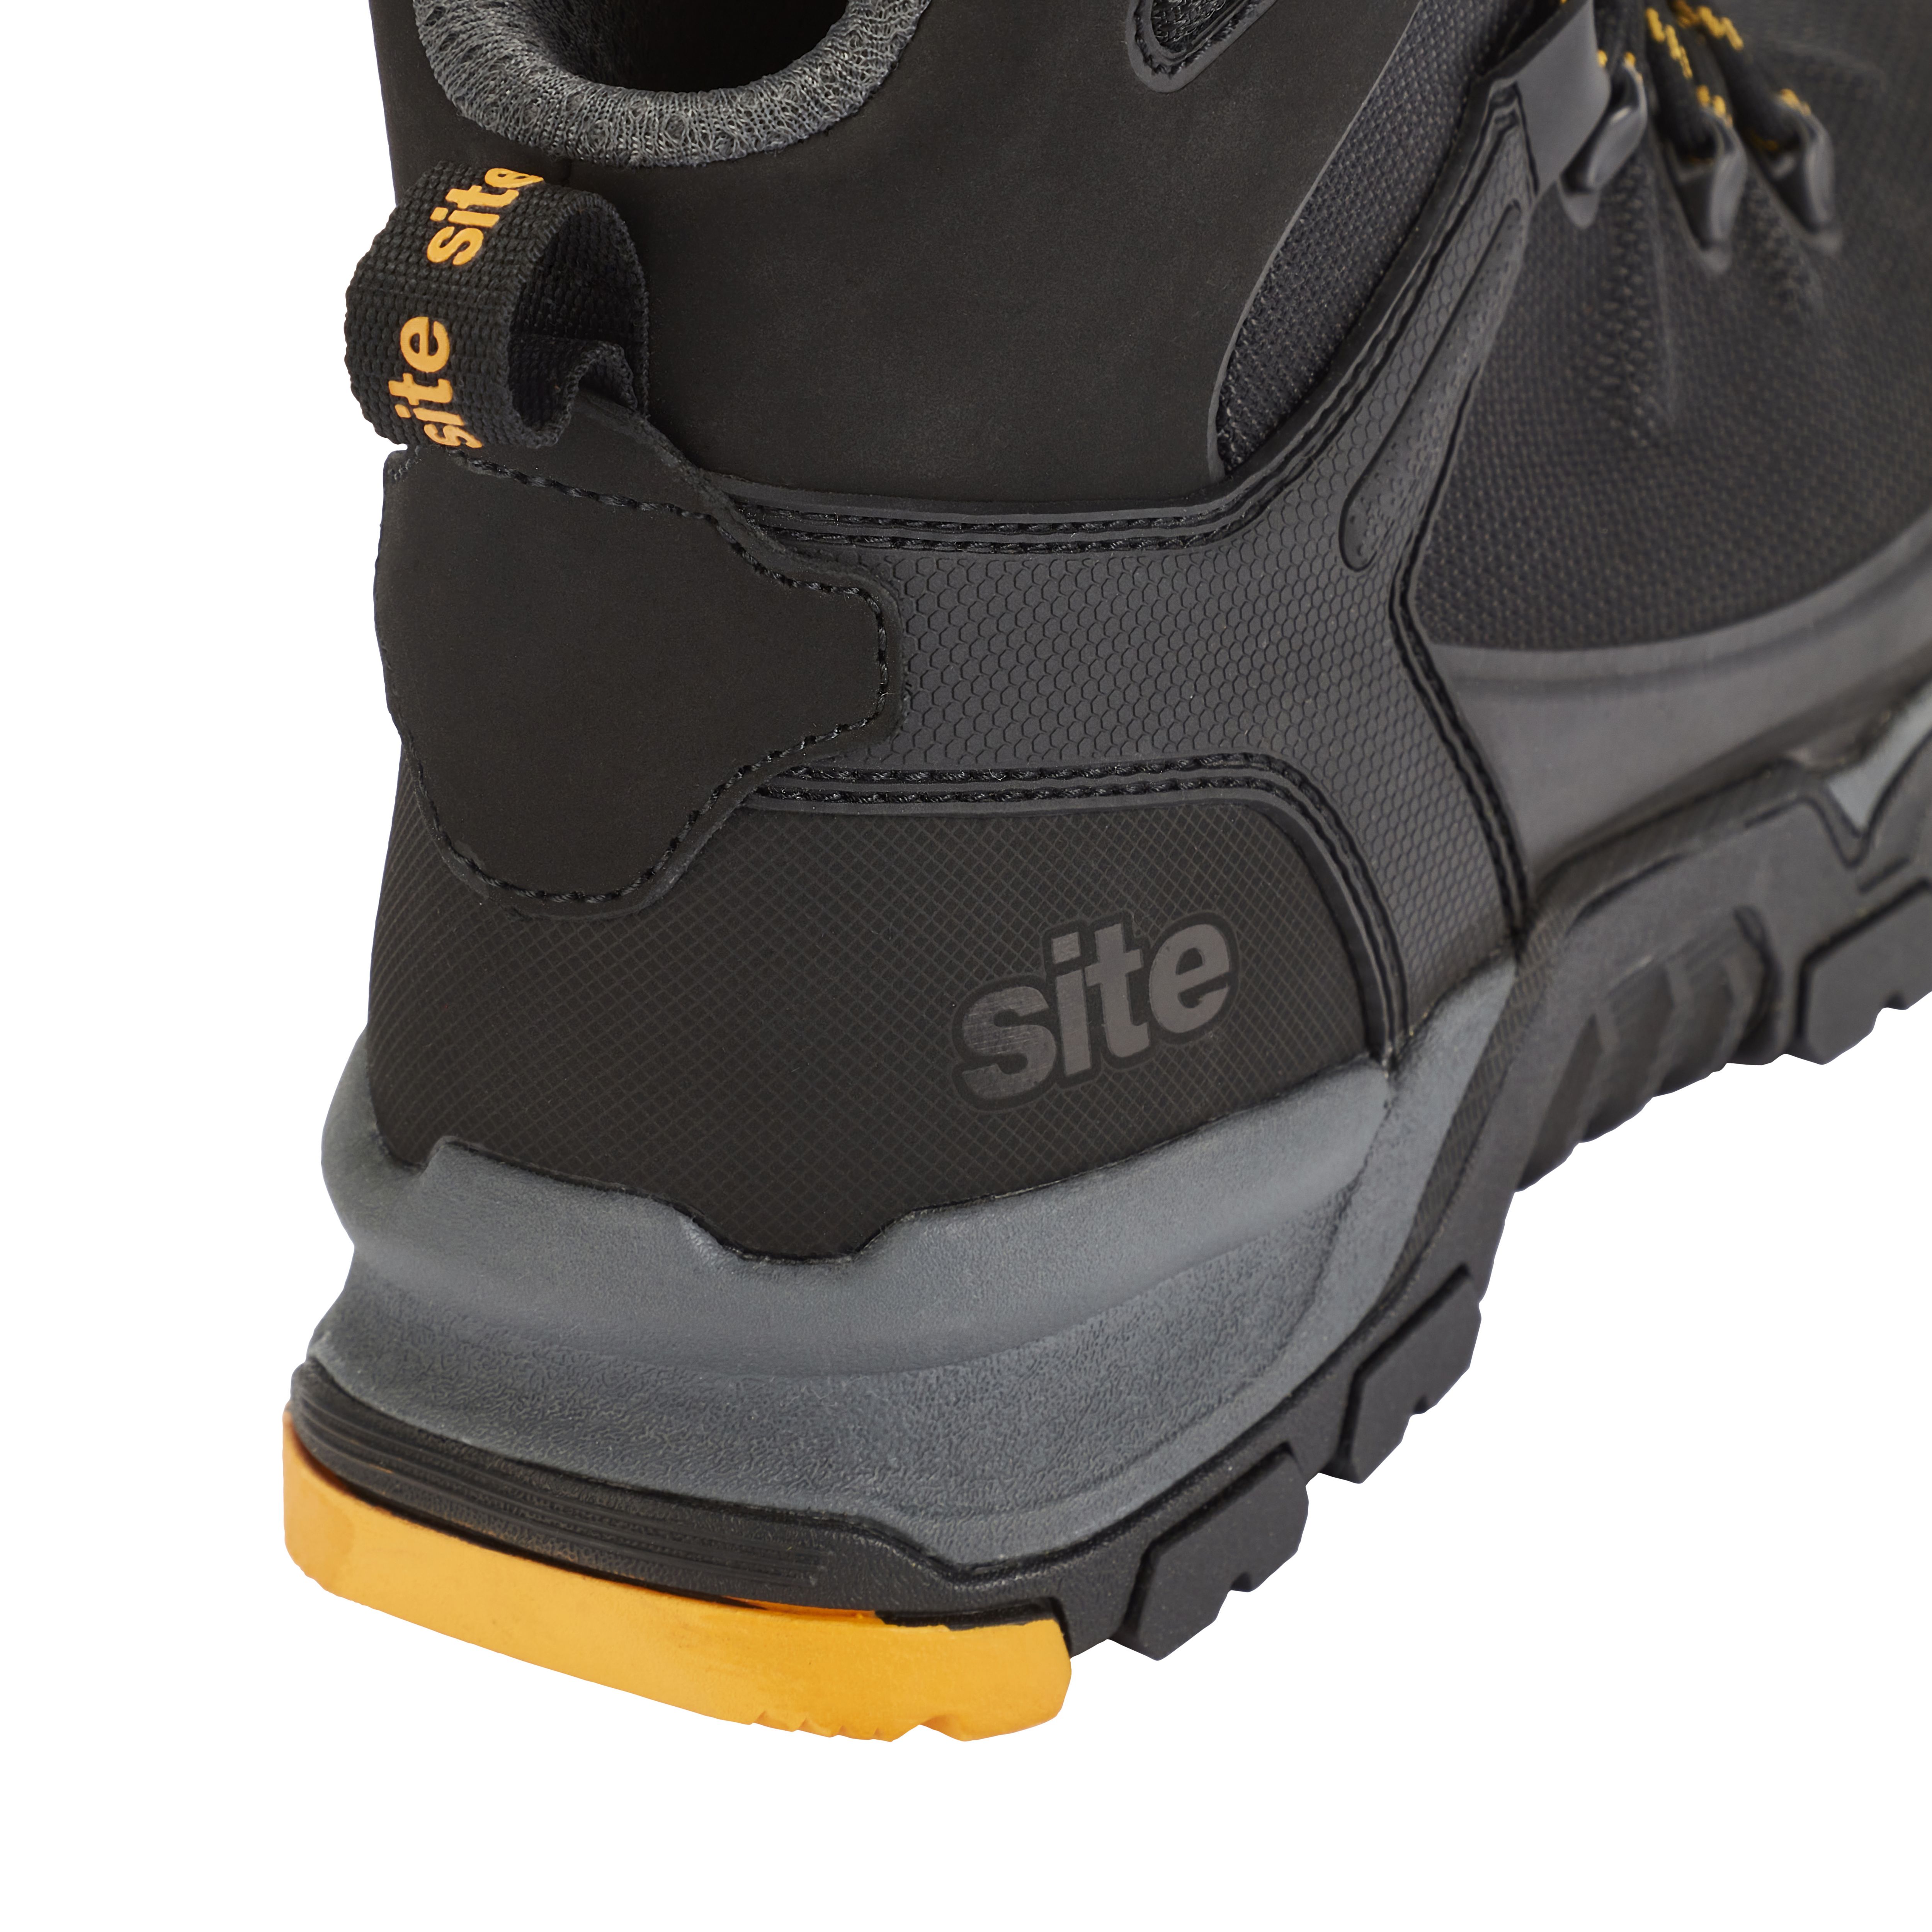 Site Densham Men's Black Safety boots, Size 11